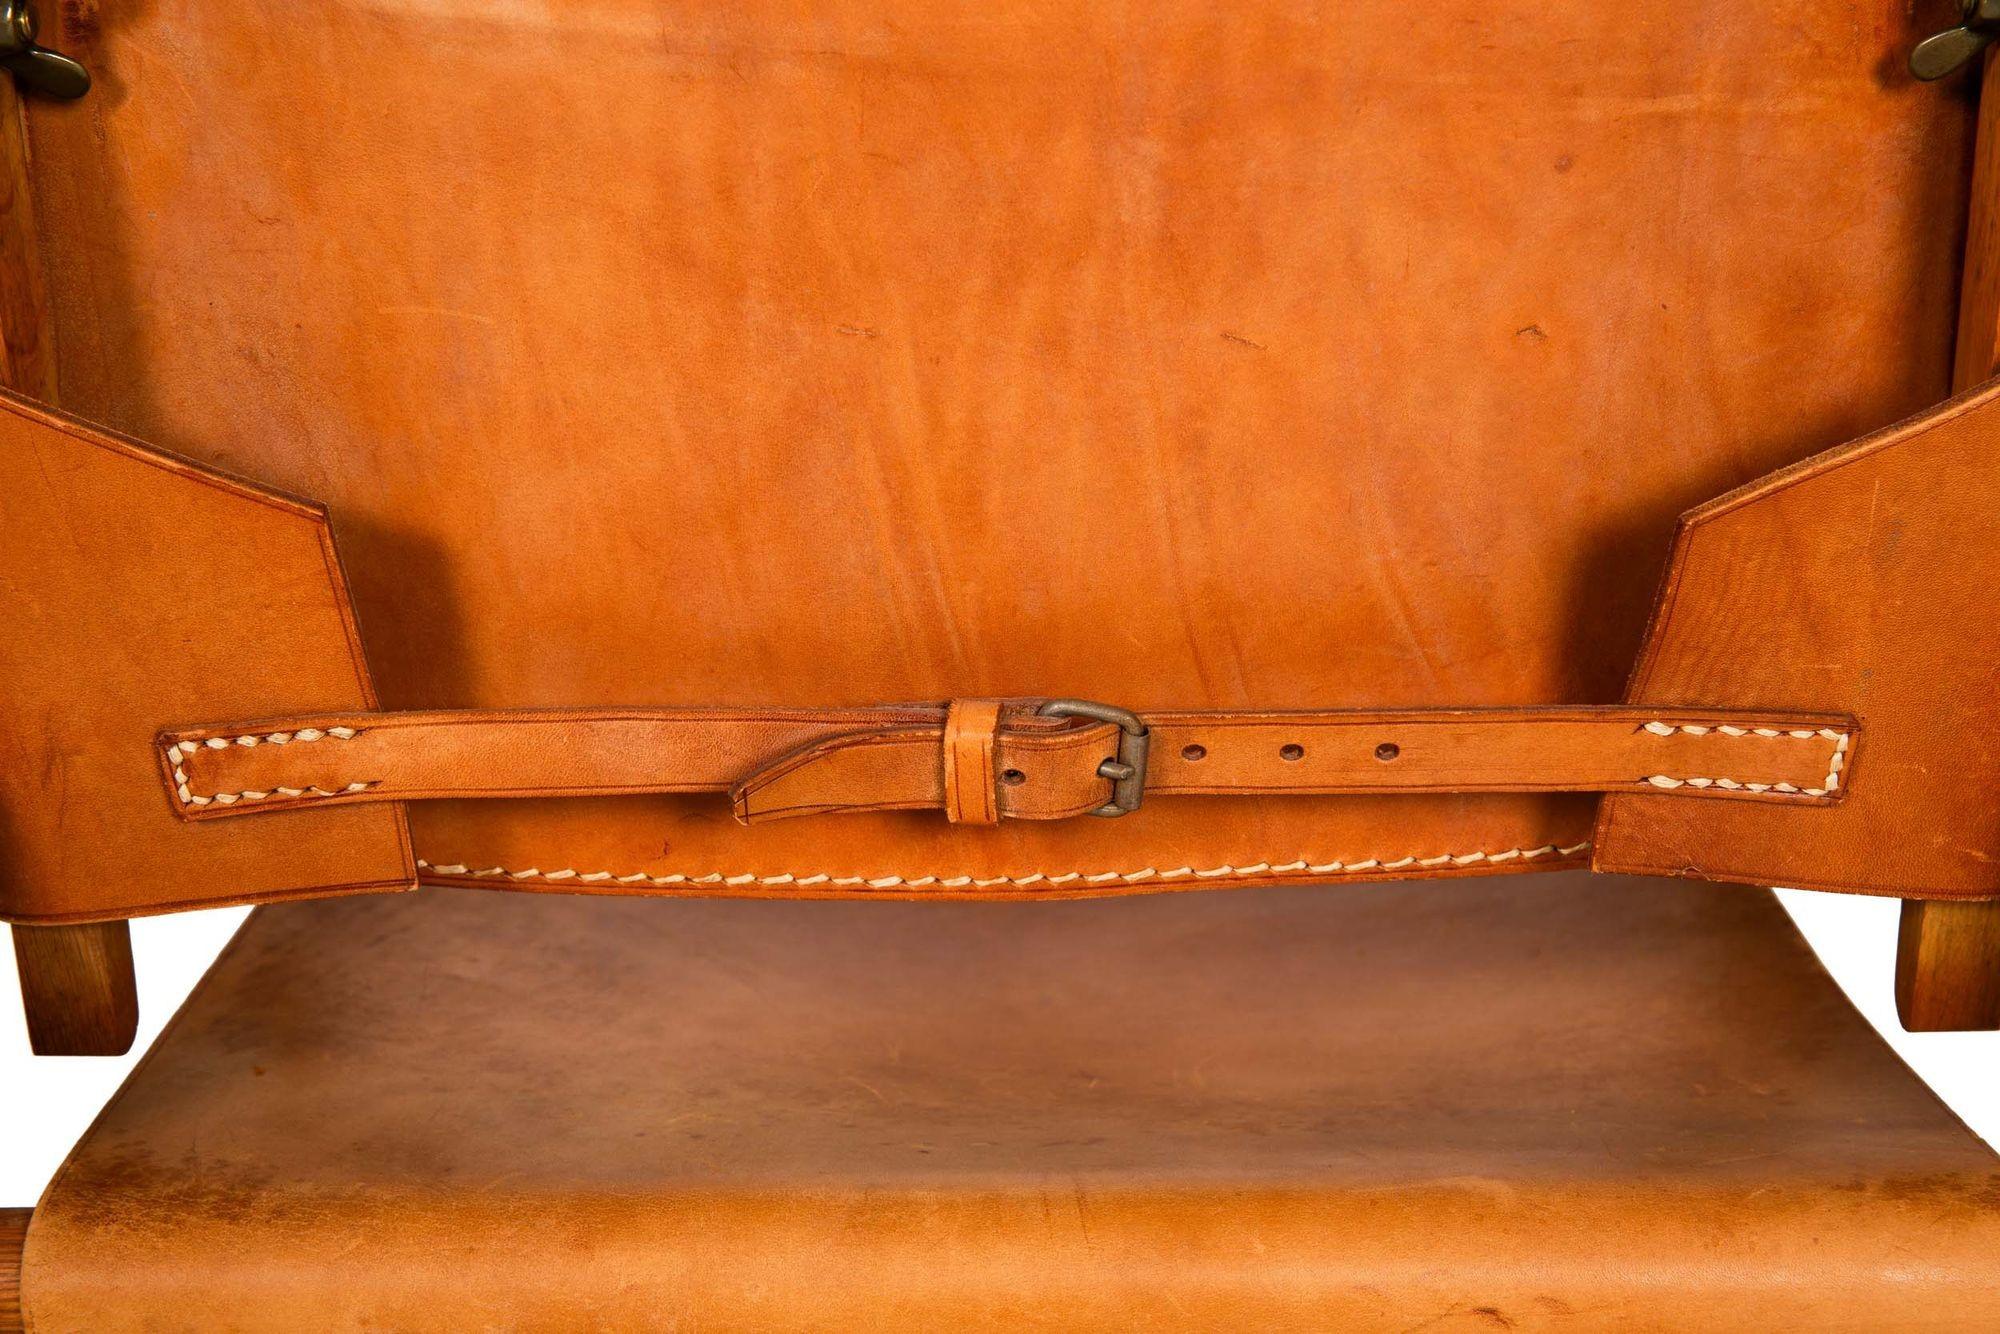 Vintage Circa 1950s Leather and Oak “Safari” Arm Chair by Wilhelm Kienzle For Sale 3